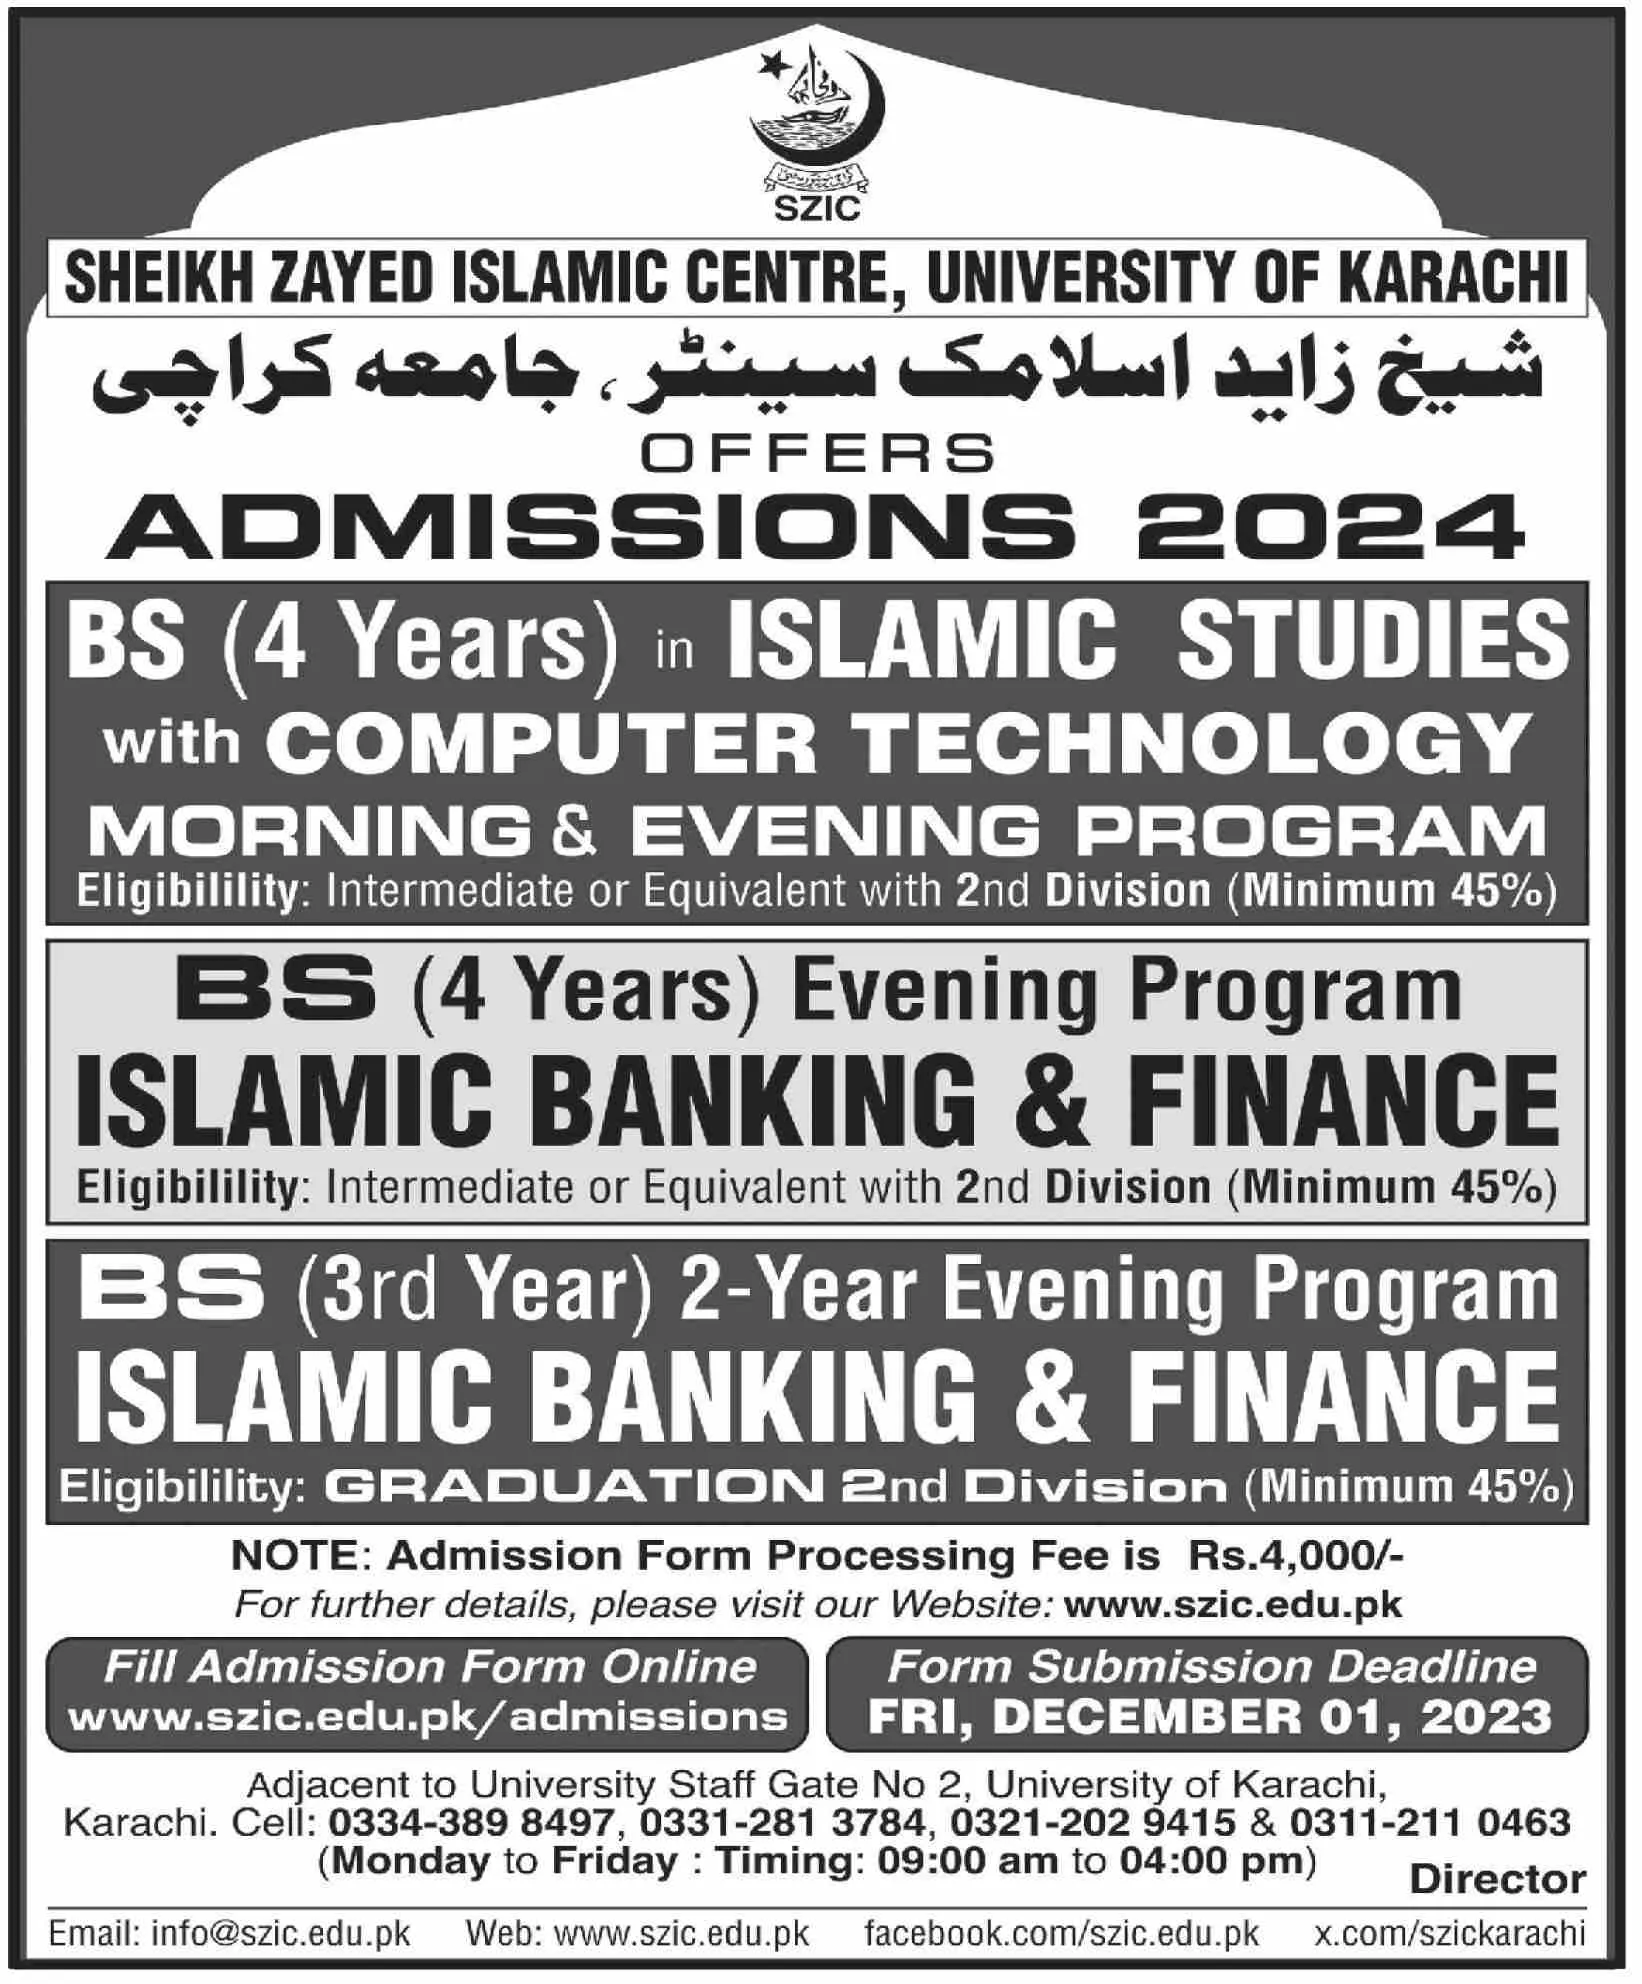 Sheikh Zayed Islamic Centre University of Karachi Admissions